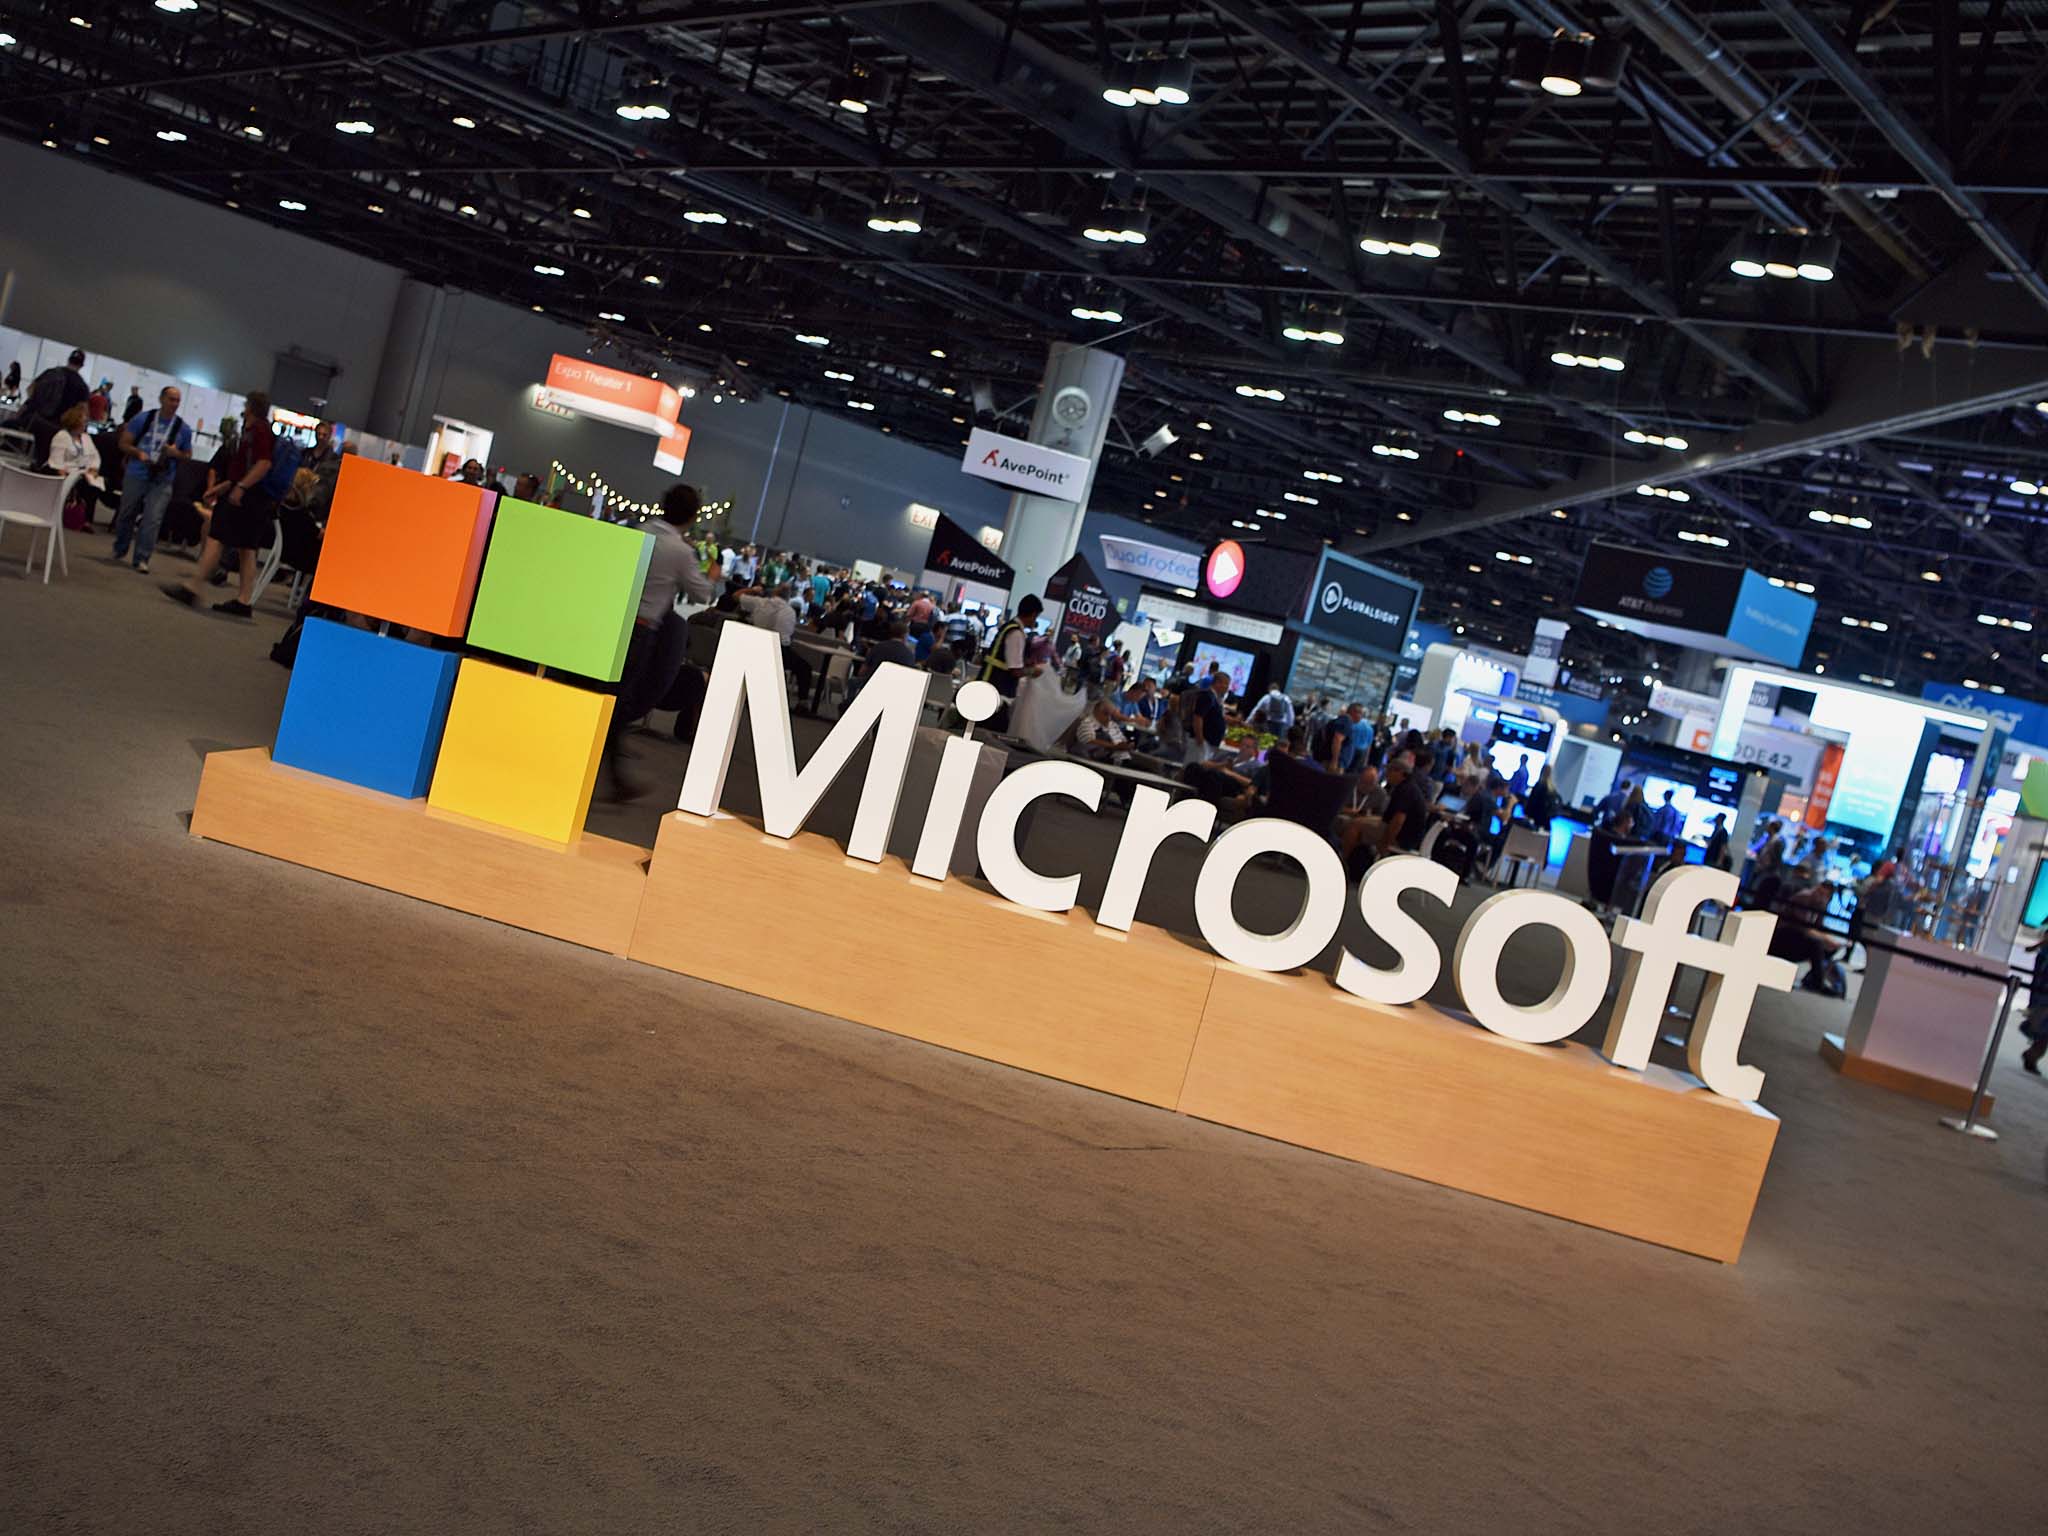 U.S. Supreme Court dismisses Microsoft email privacy case